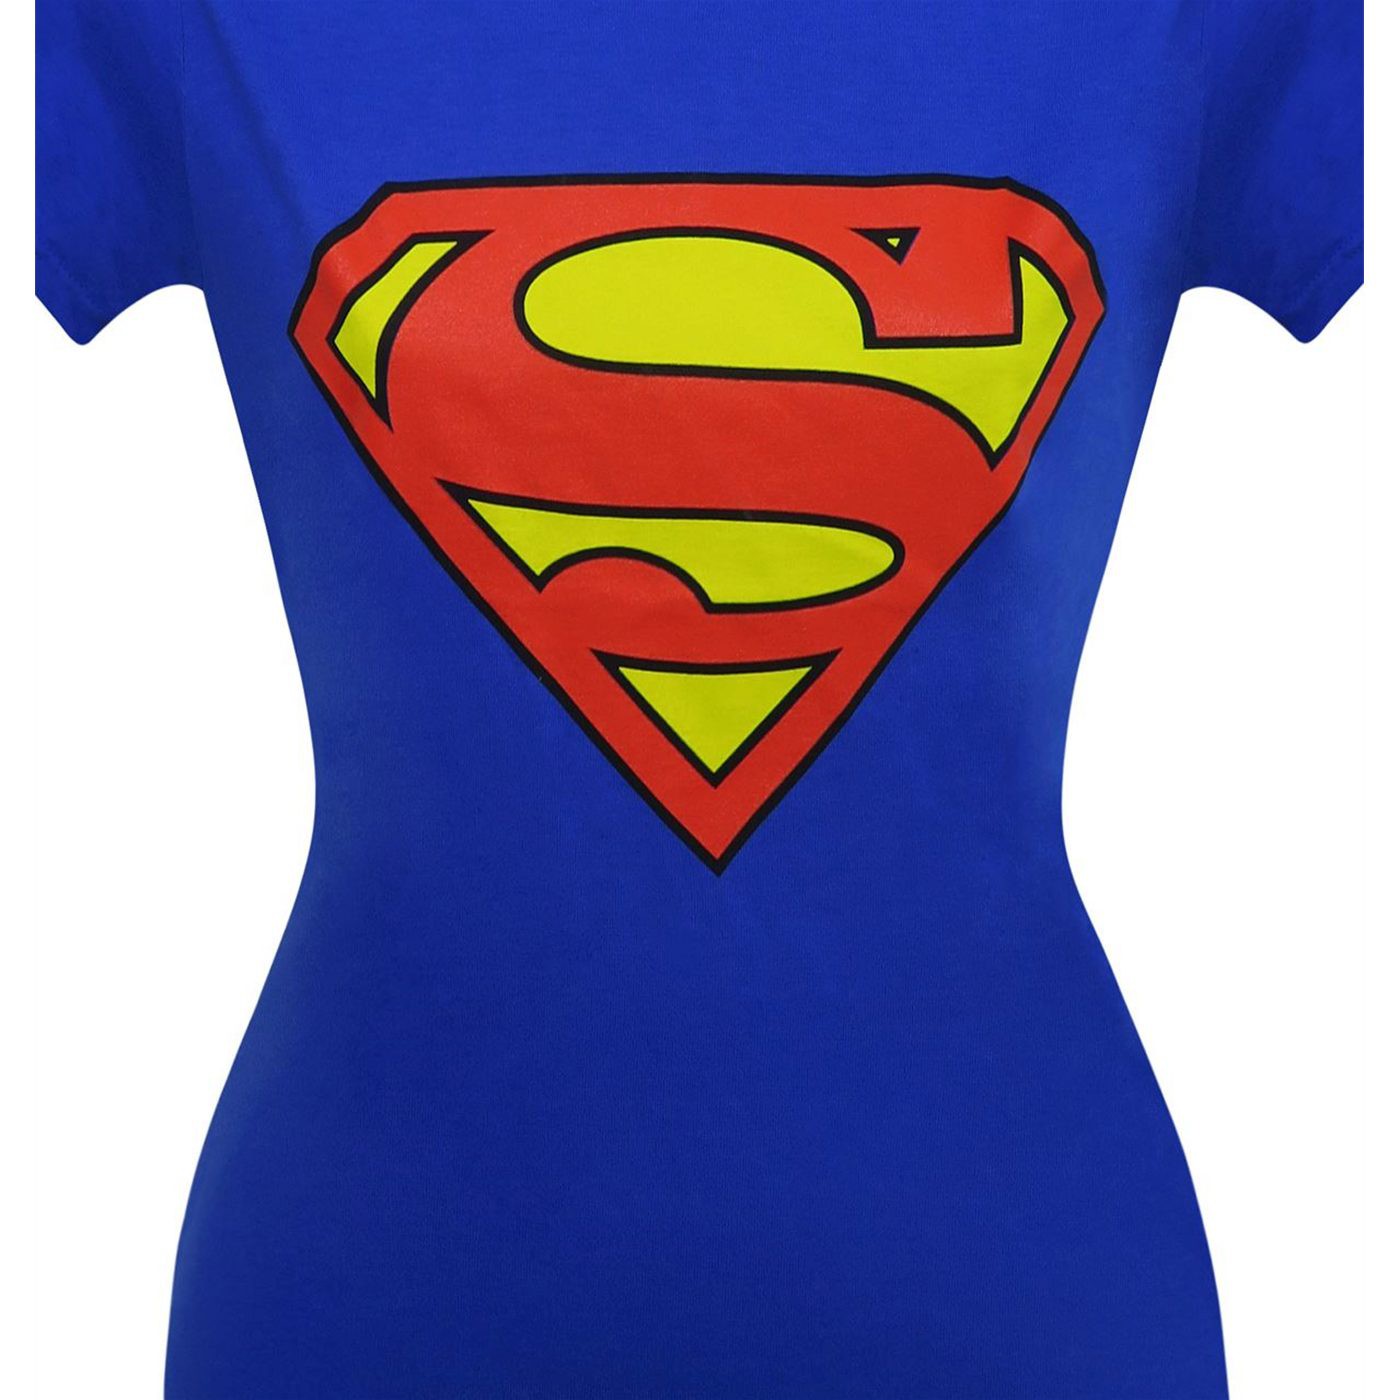 Superman Women's Symbol T-Shirt